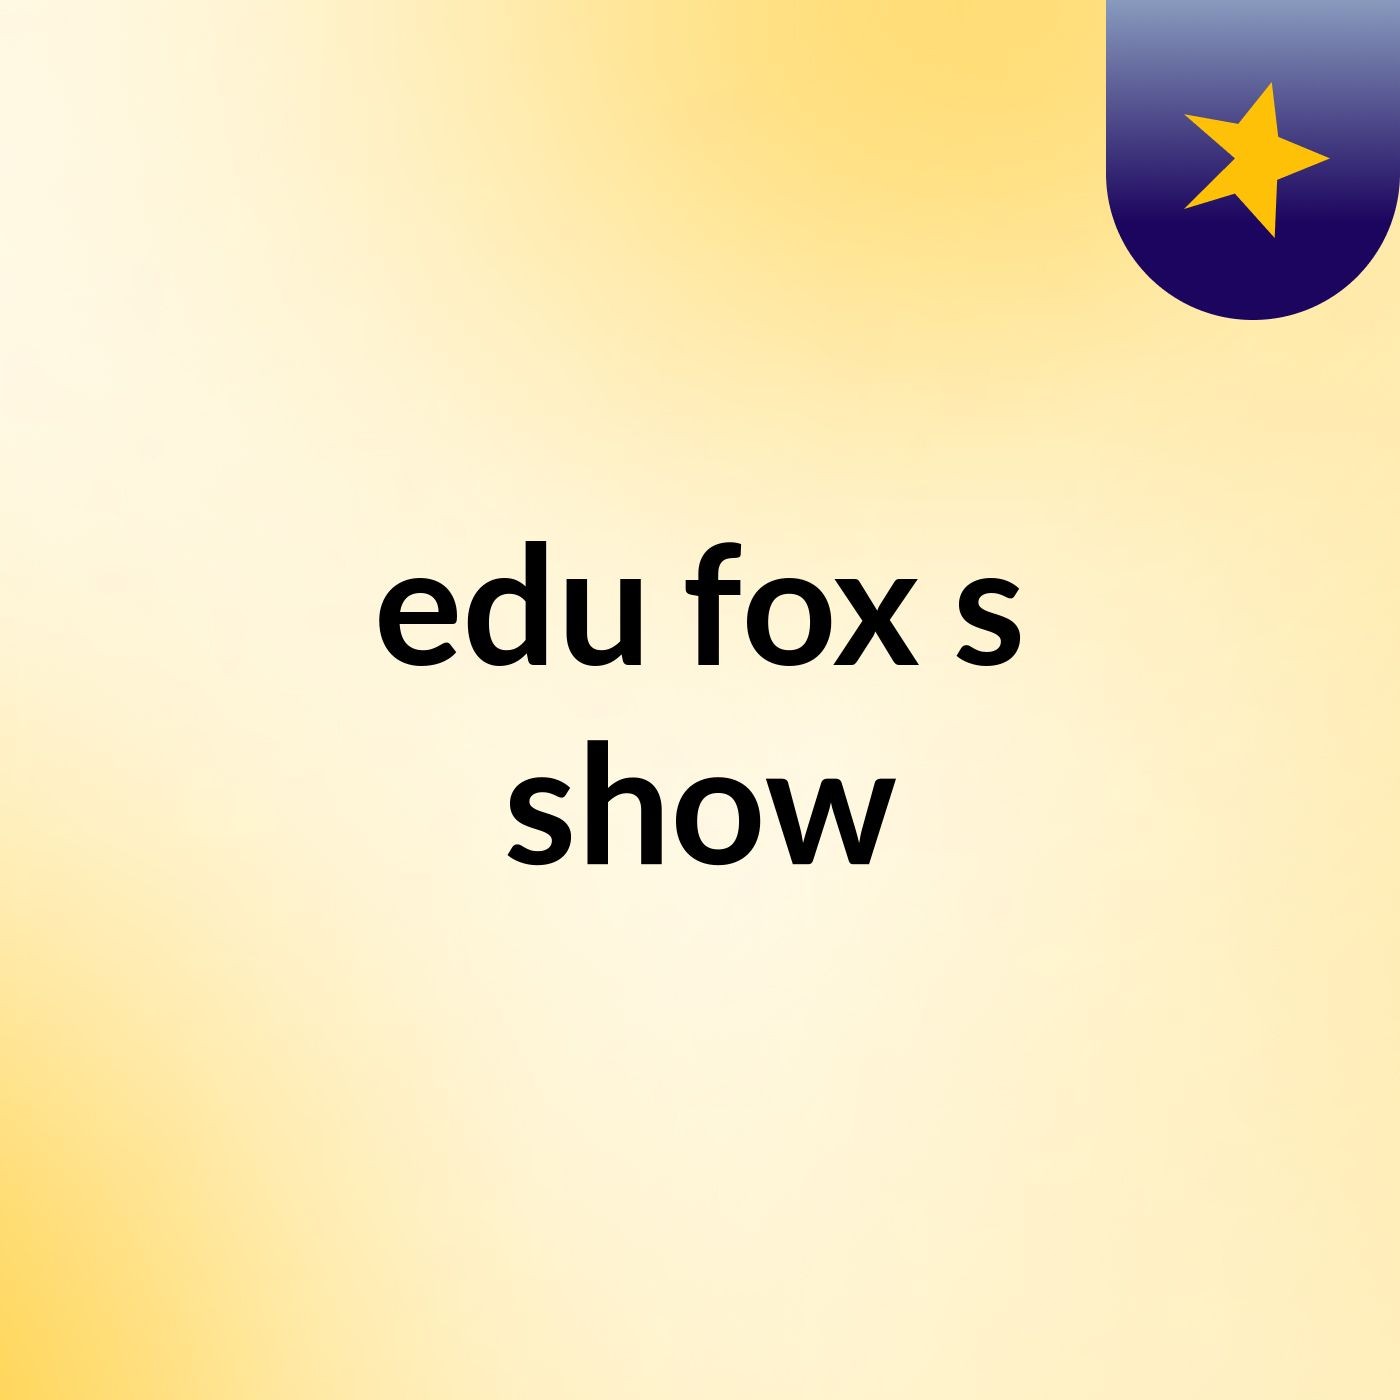 edu fox's show